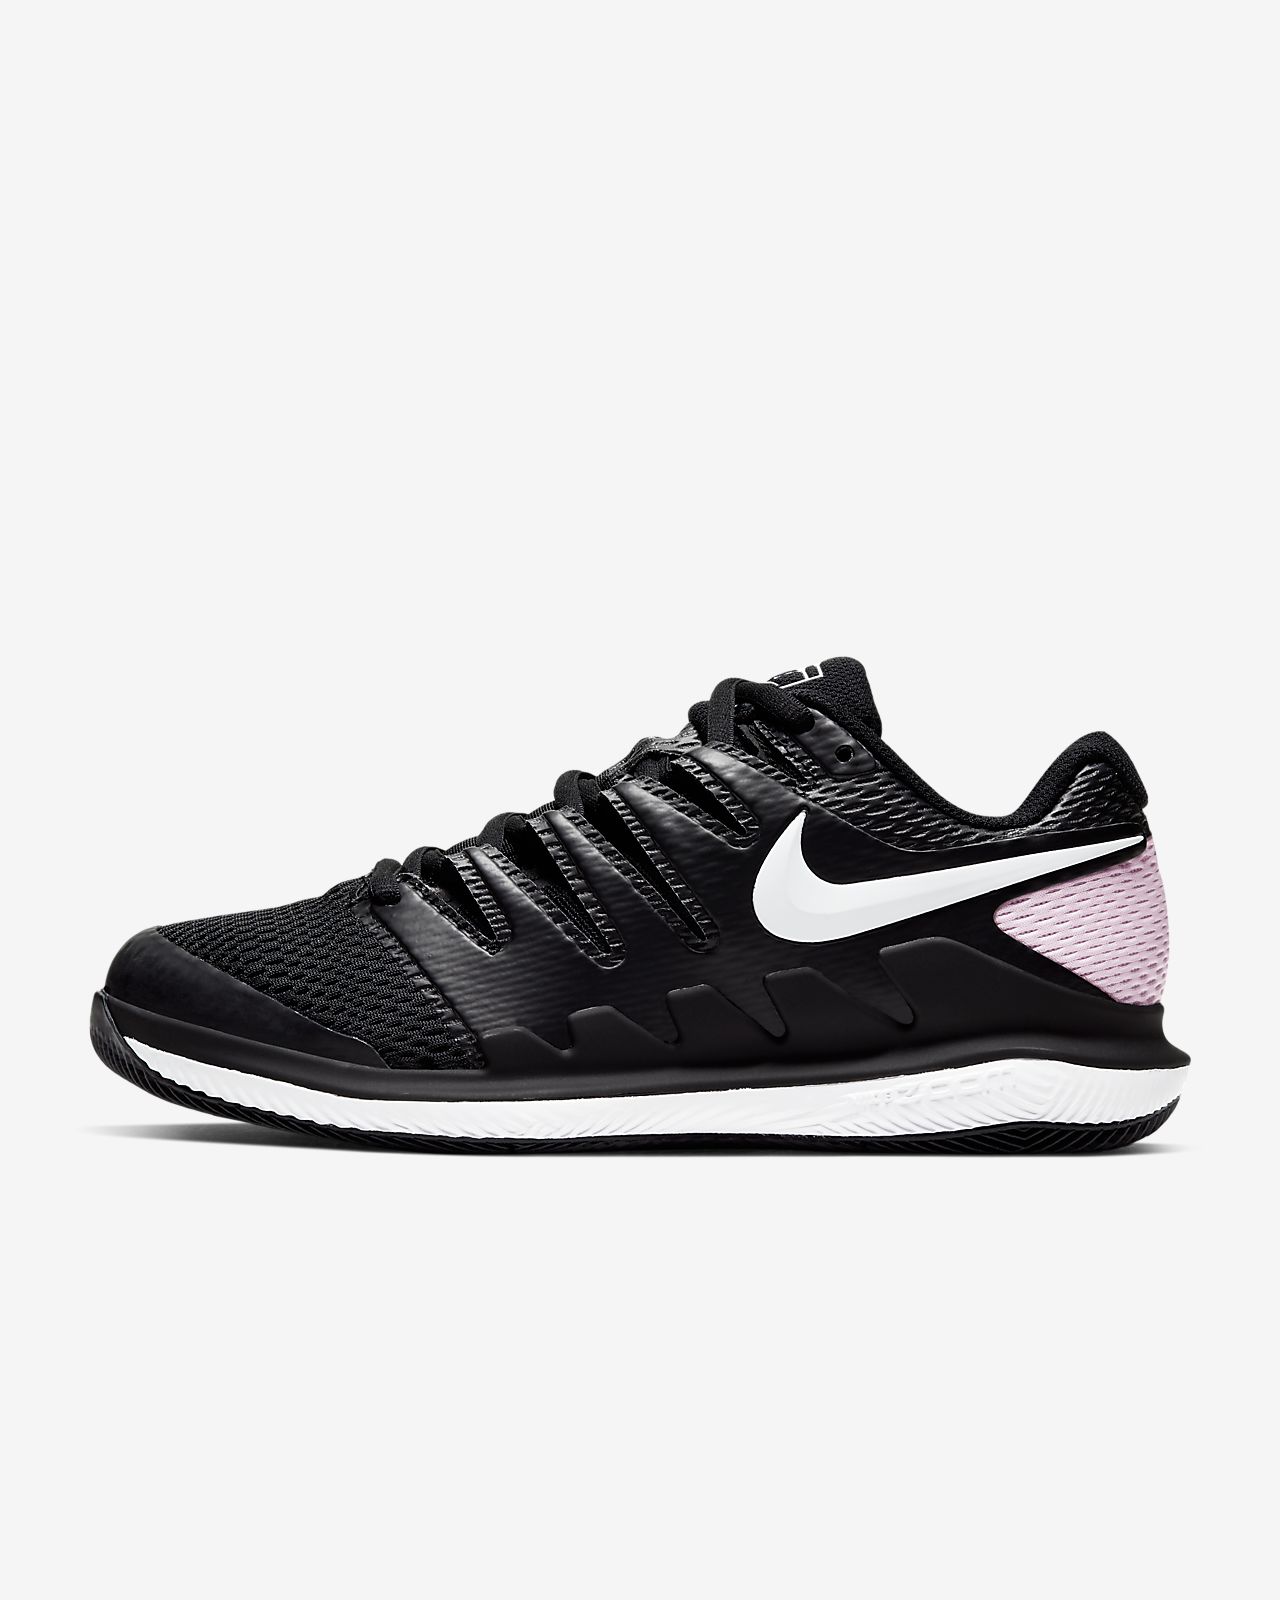 Hard Court Tennis Shoe. Nike ZA